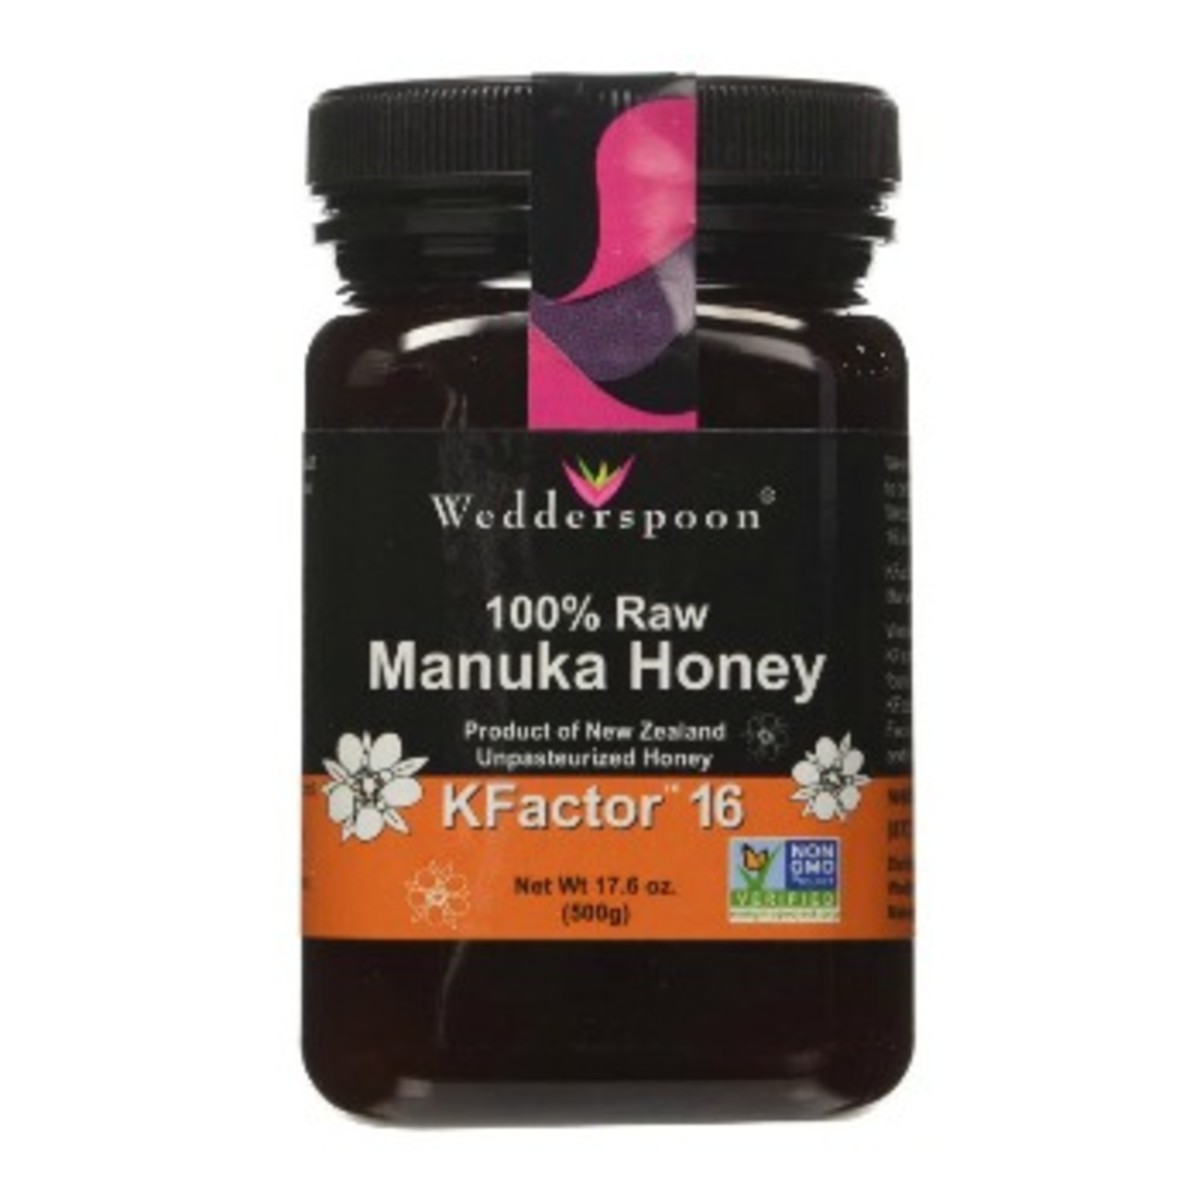 Wedderspoon 100% Raw Manuka Honey